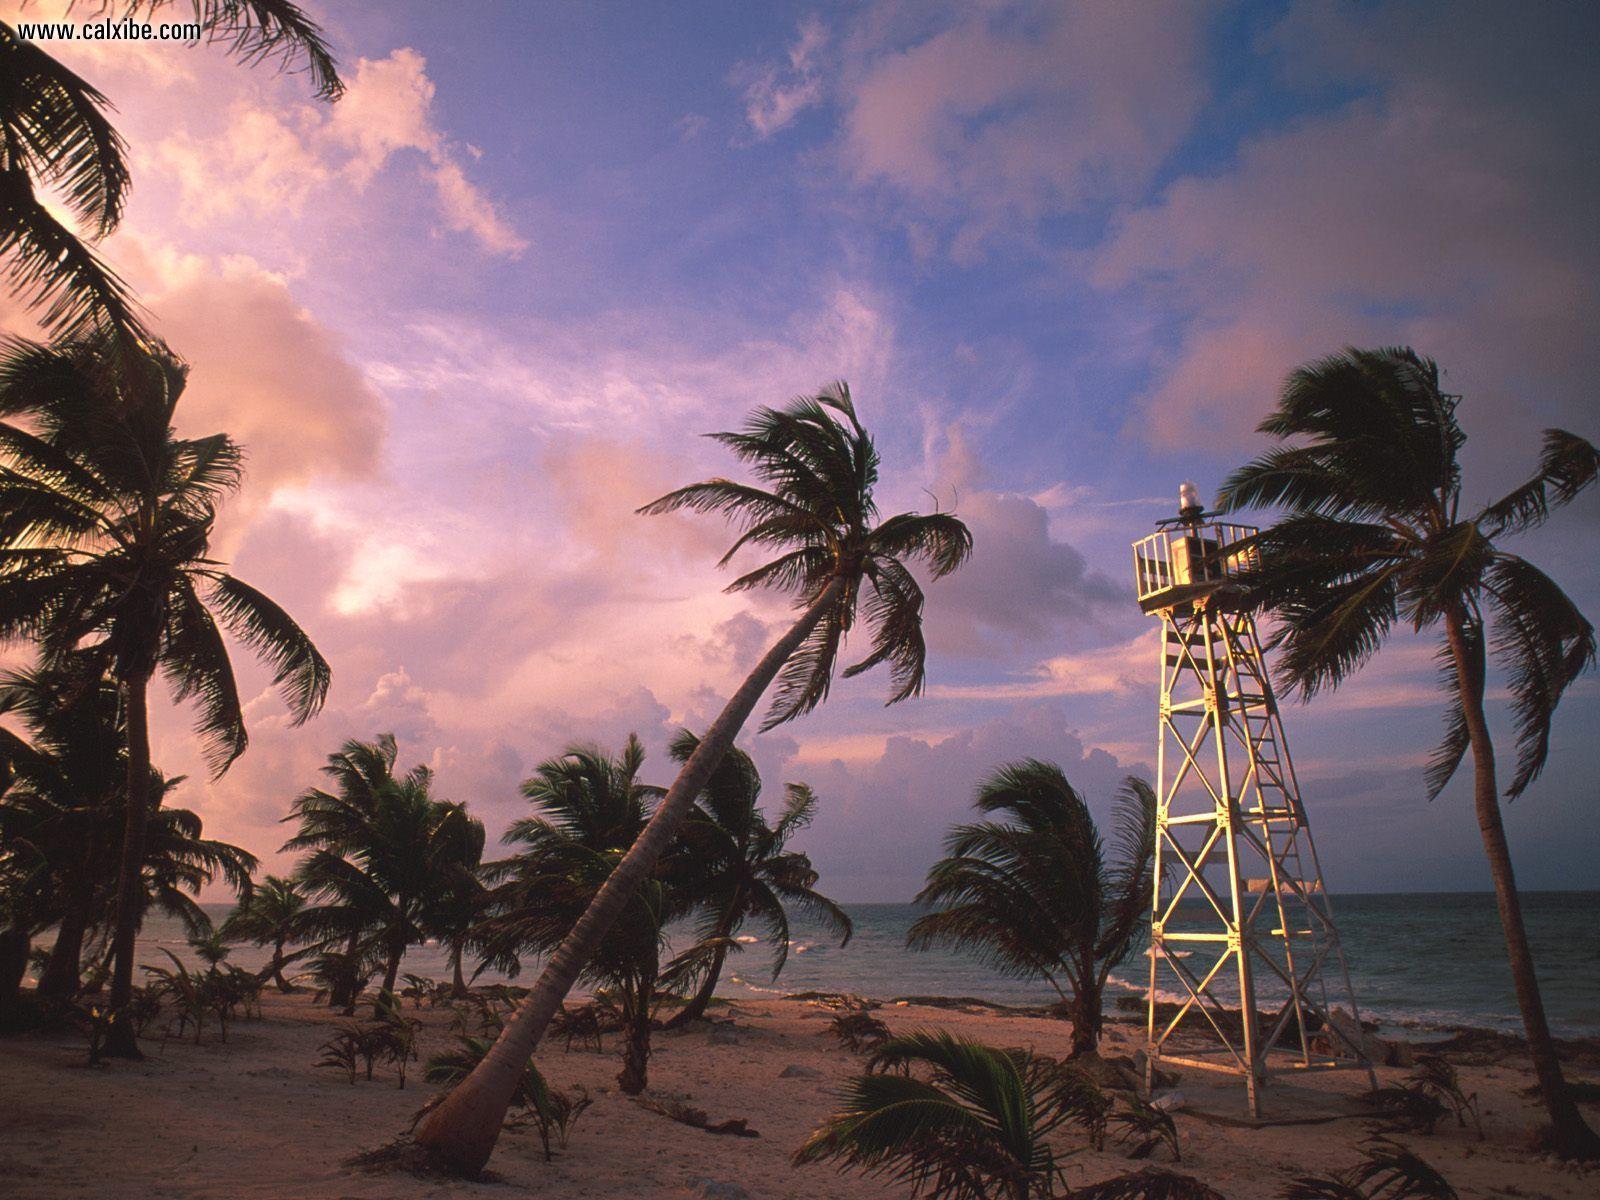 Known places: Casa Blanca Lighthouse, Yucatan Peninsula, Mexico